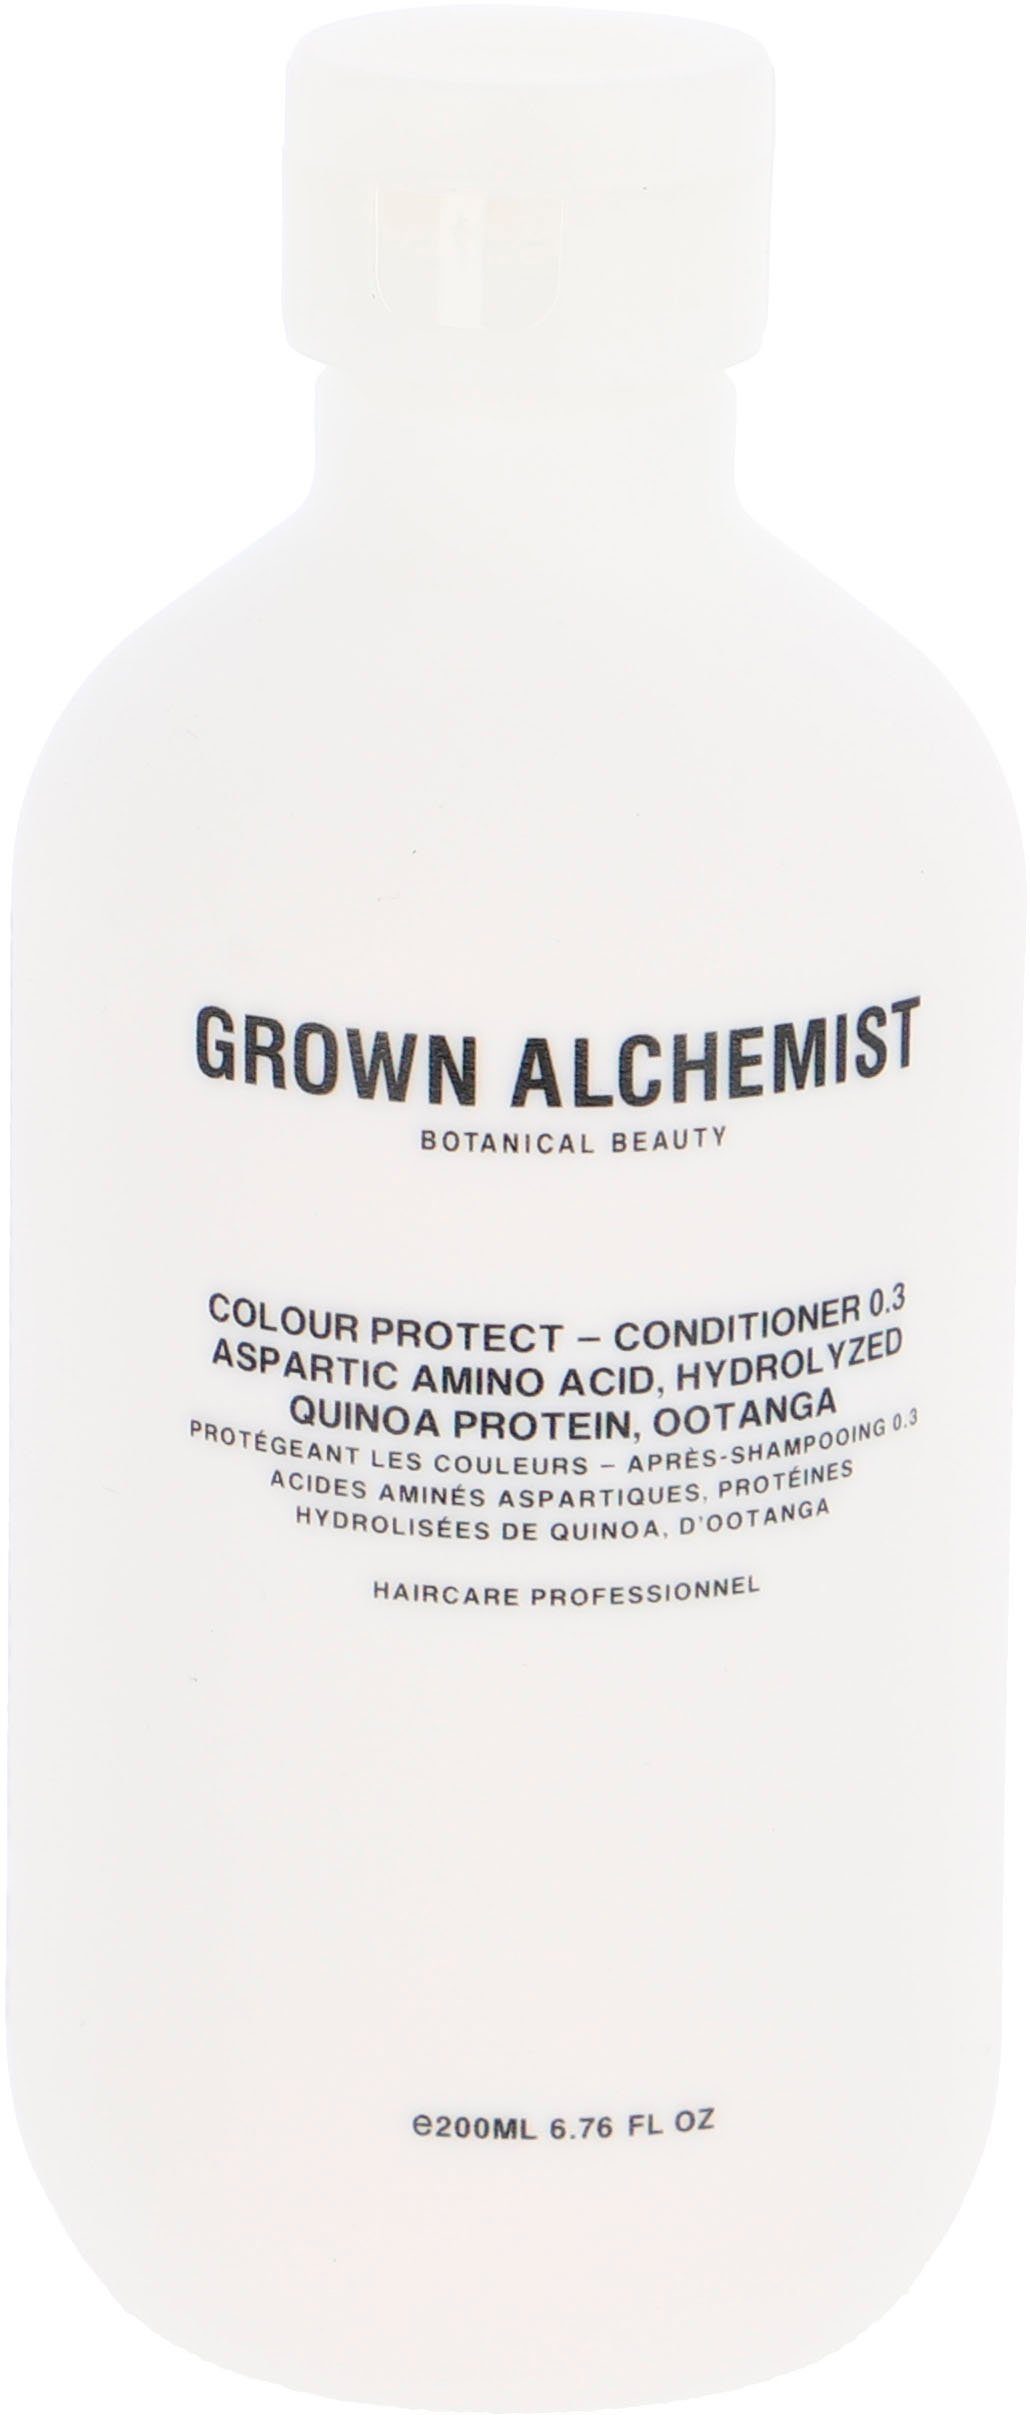 GROWN ALCHEMIST Haarspülung Colour Protect - Conditioner 0.3, Aspartic Amino Acid, Hydrolyzed Quinoa Protein, Ootanga | Spülungen